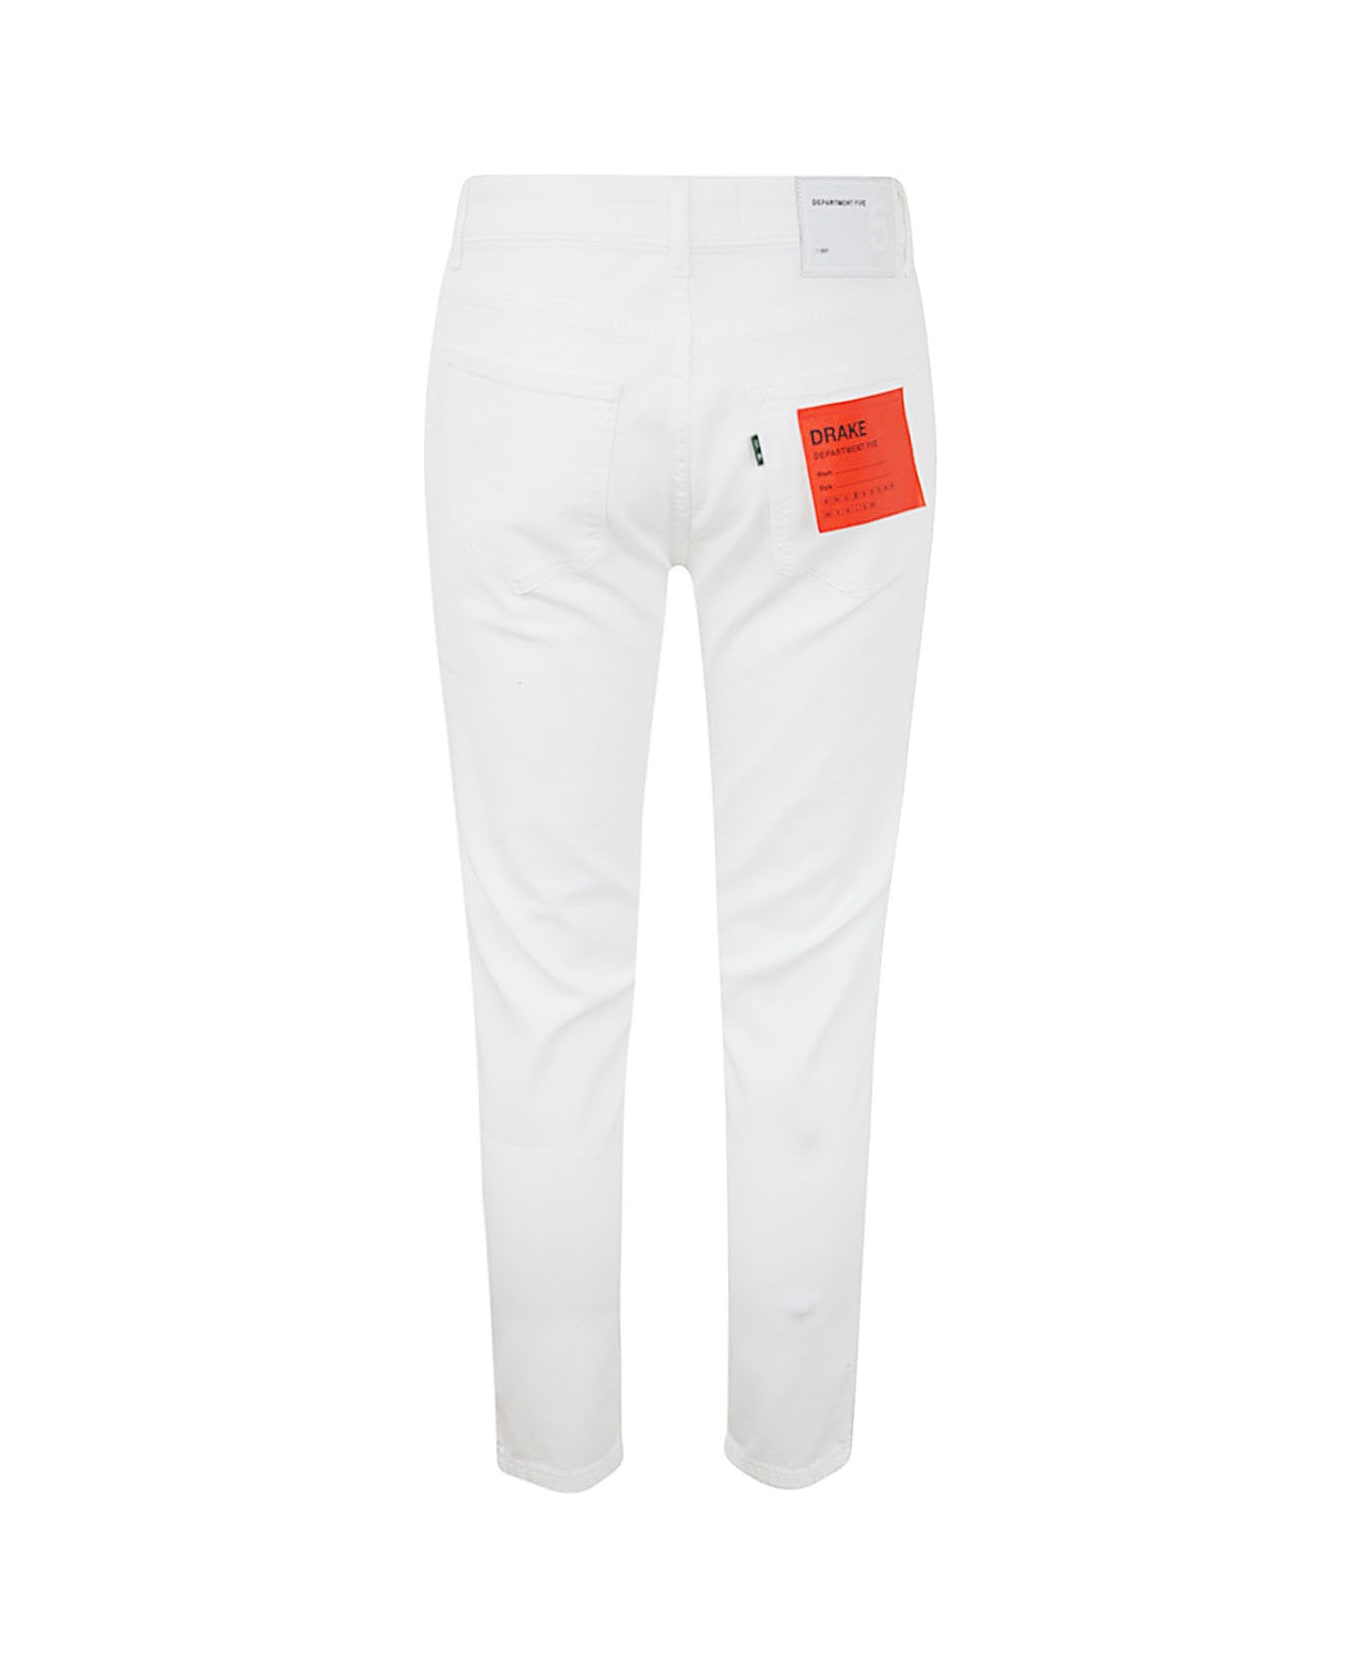 Department Five Drake Jeans - White